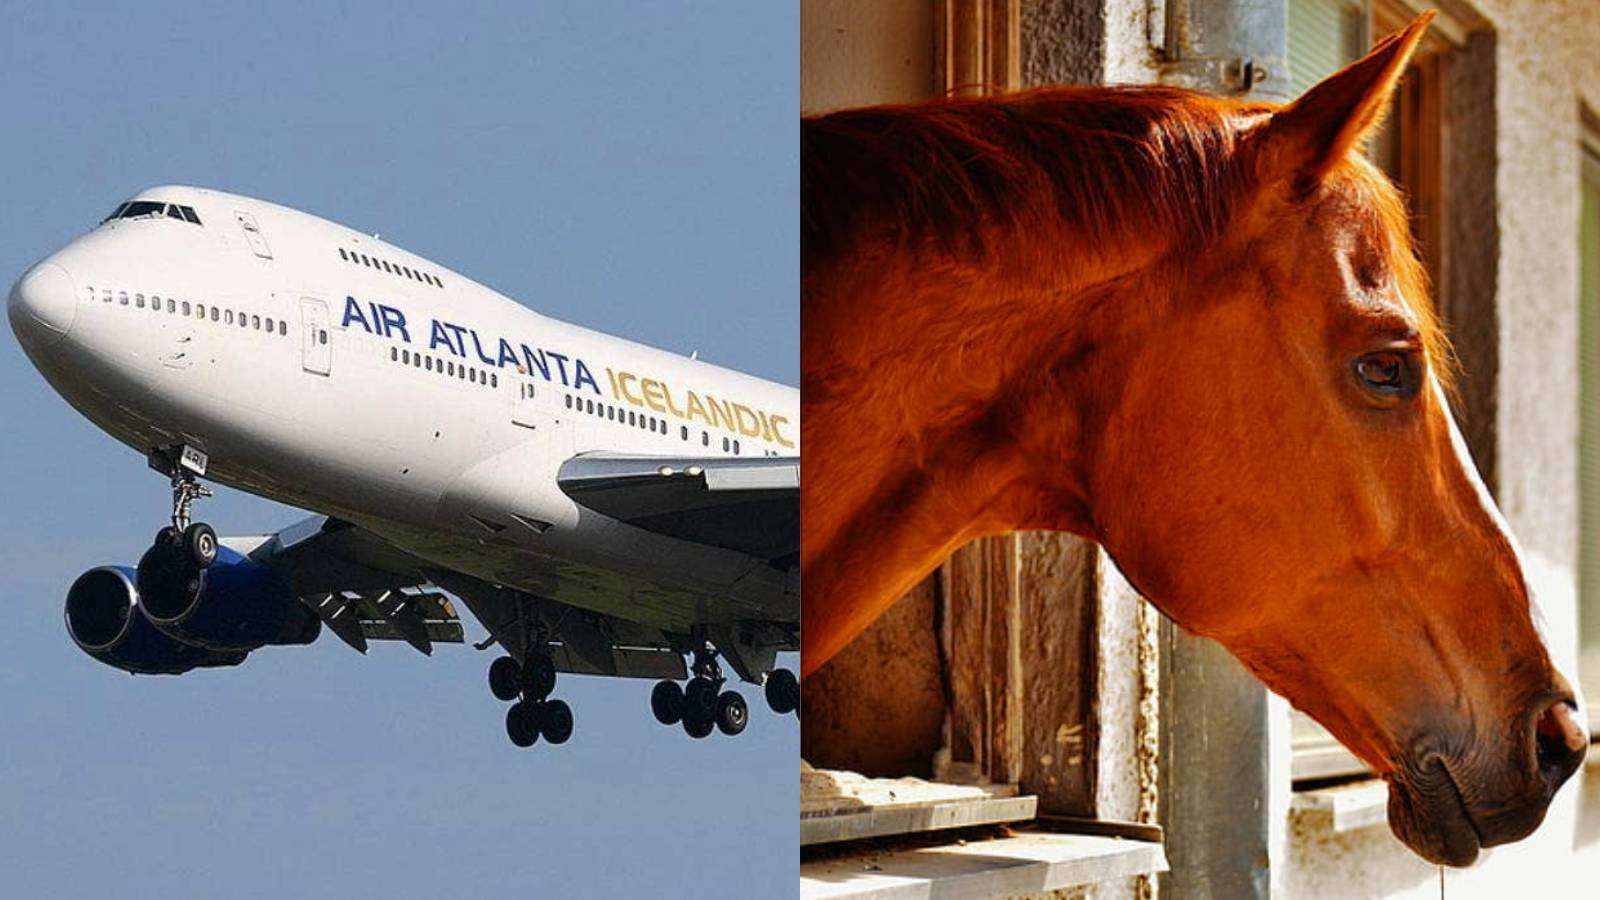 Horse forces emergency landing on plane